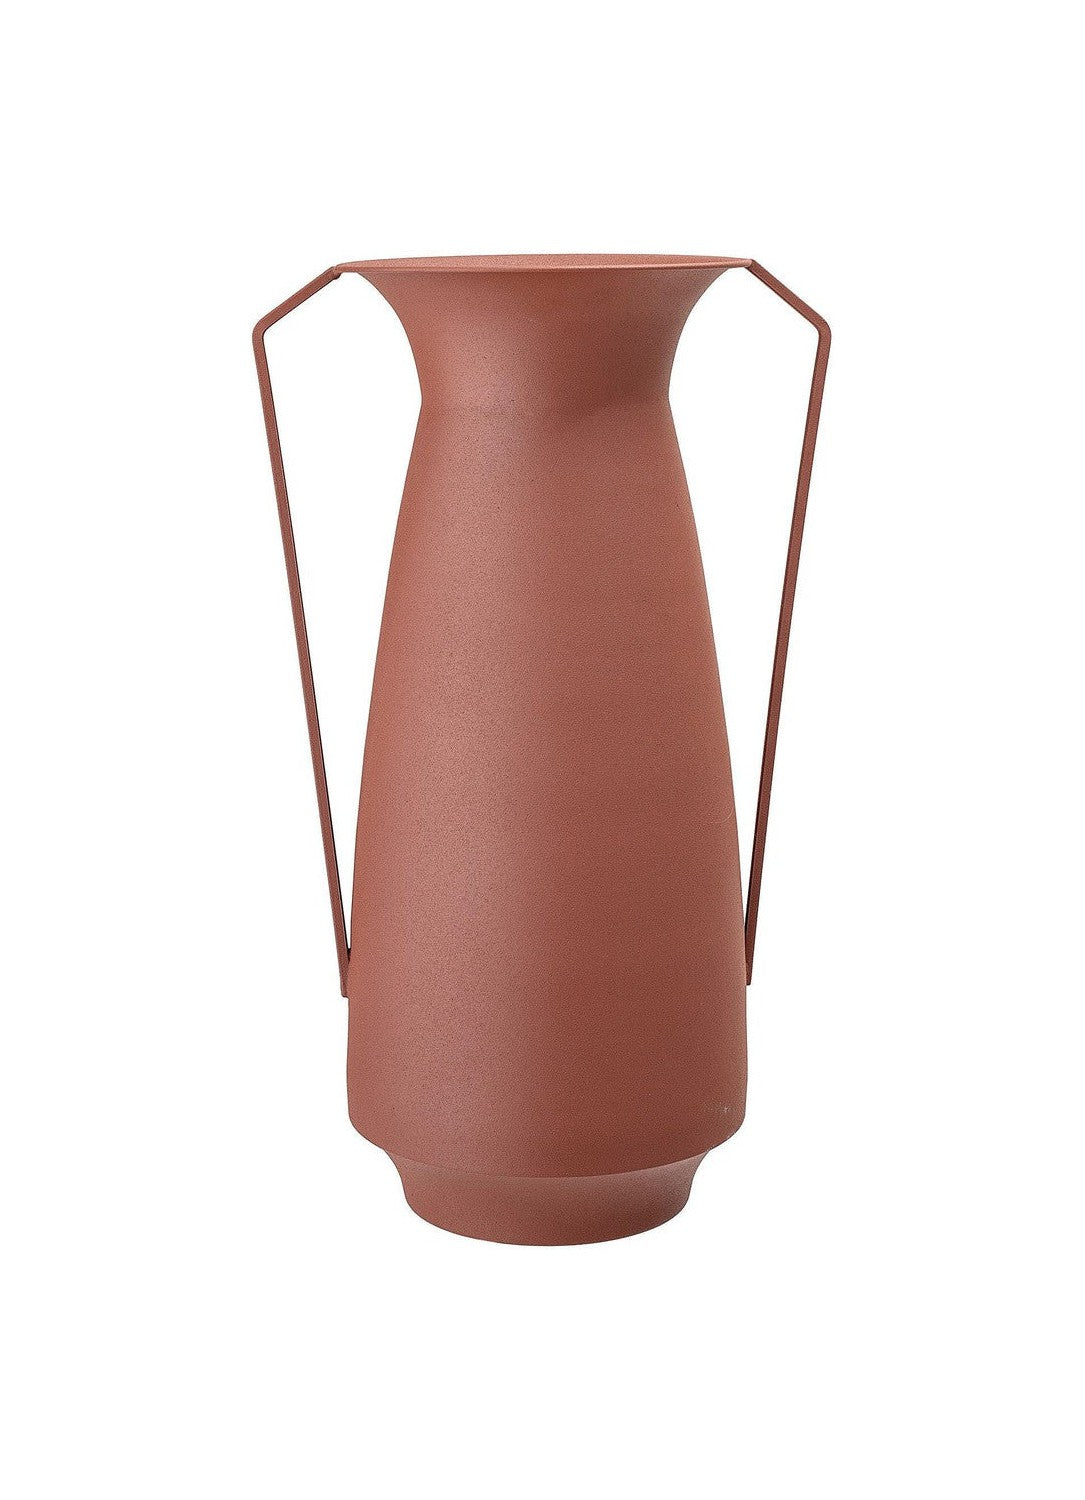 Bloomingville Rikkegro Vase, Brown, Metall